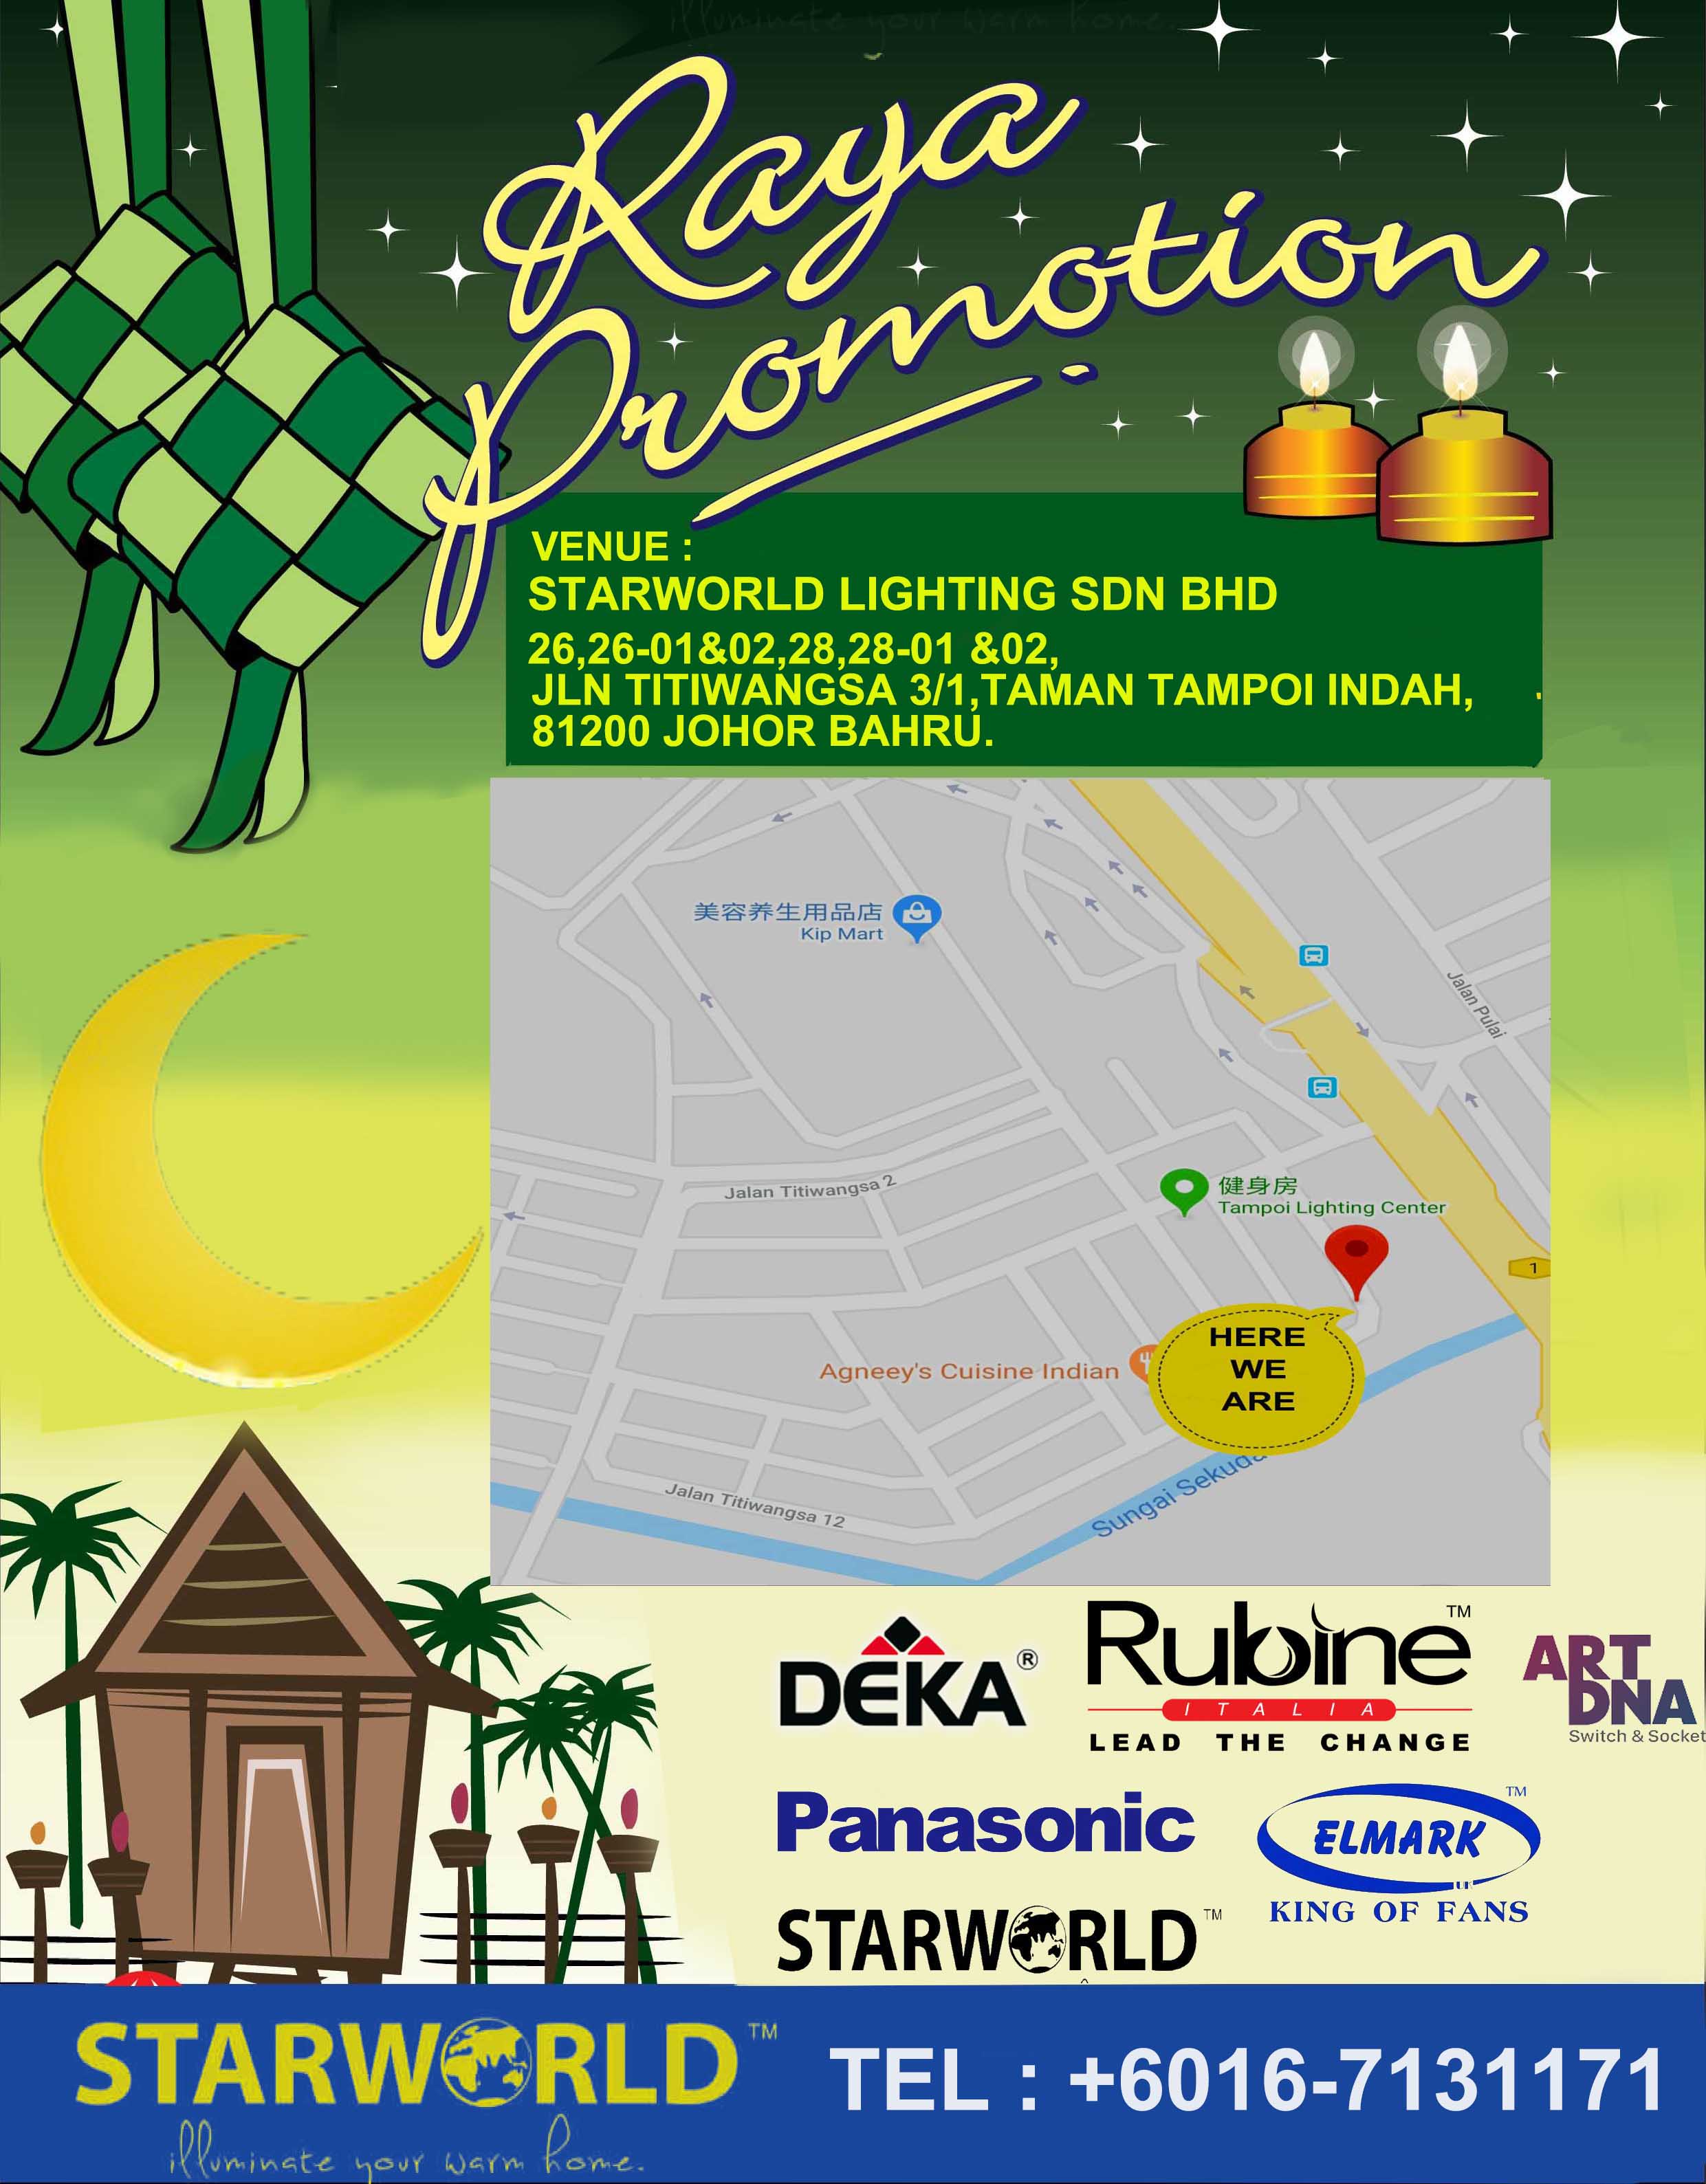 PB 3858 Pok Brothers Raya promotion leaflet 2012_7